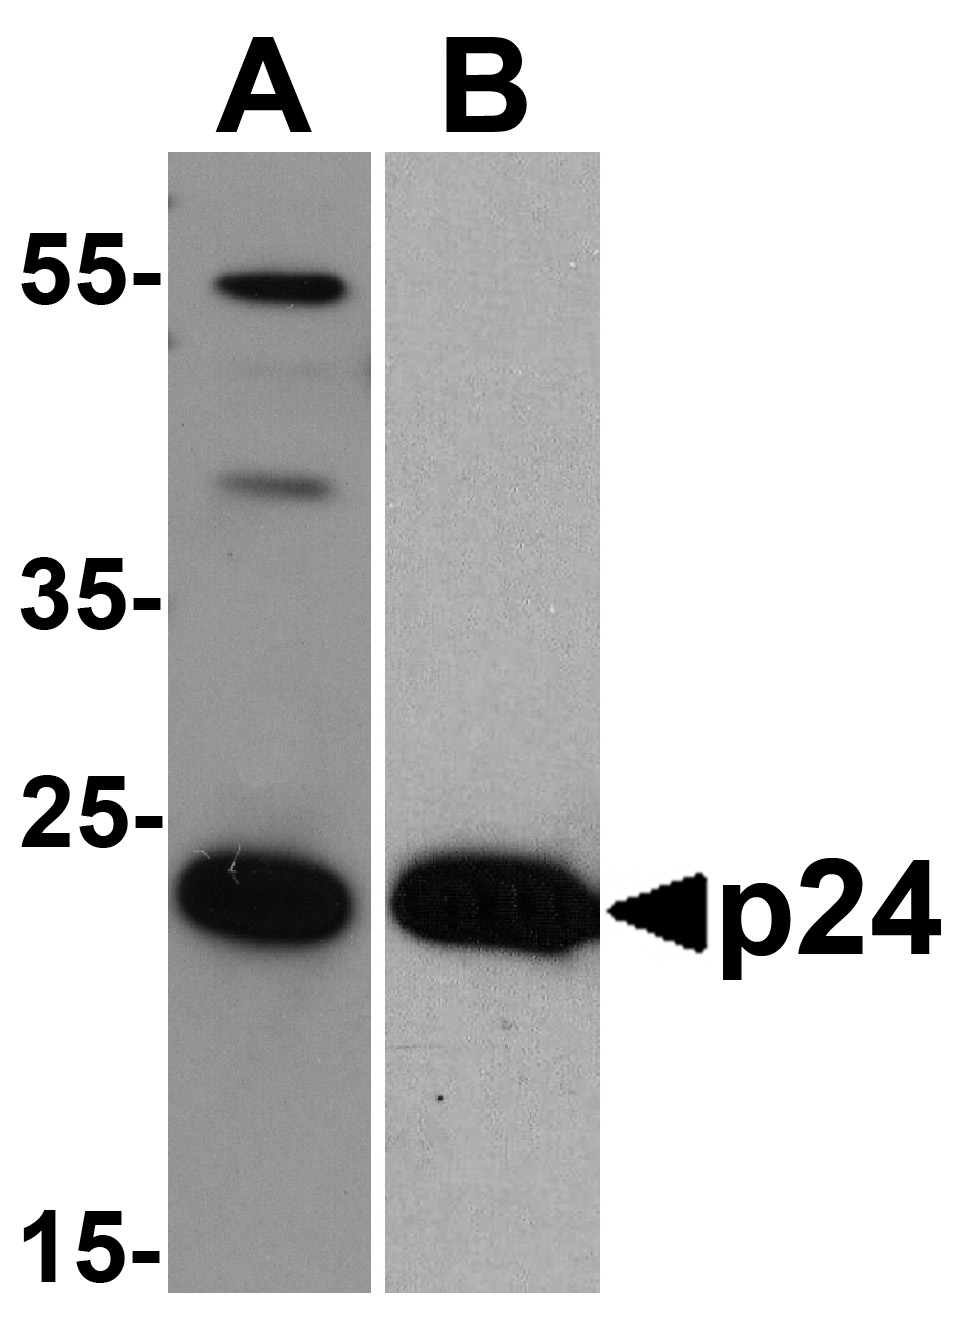 /assets/images/antibody/110/pm-6335-1-w.jpg